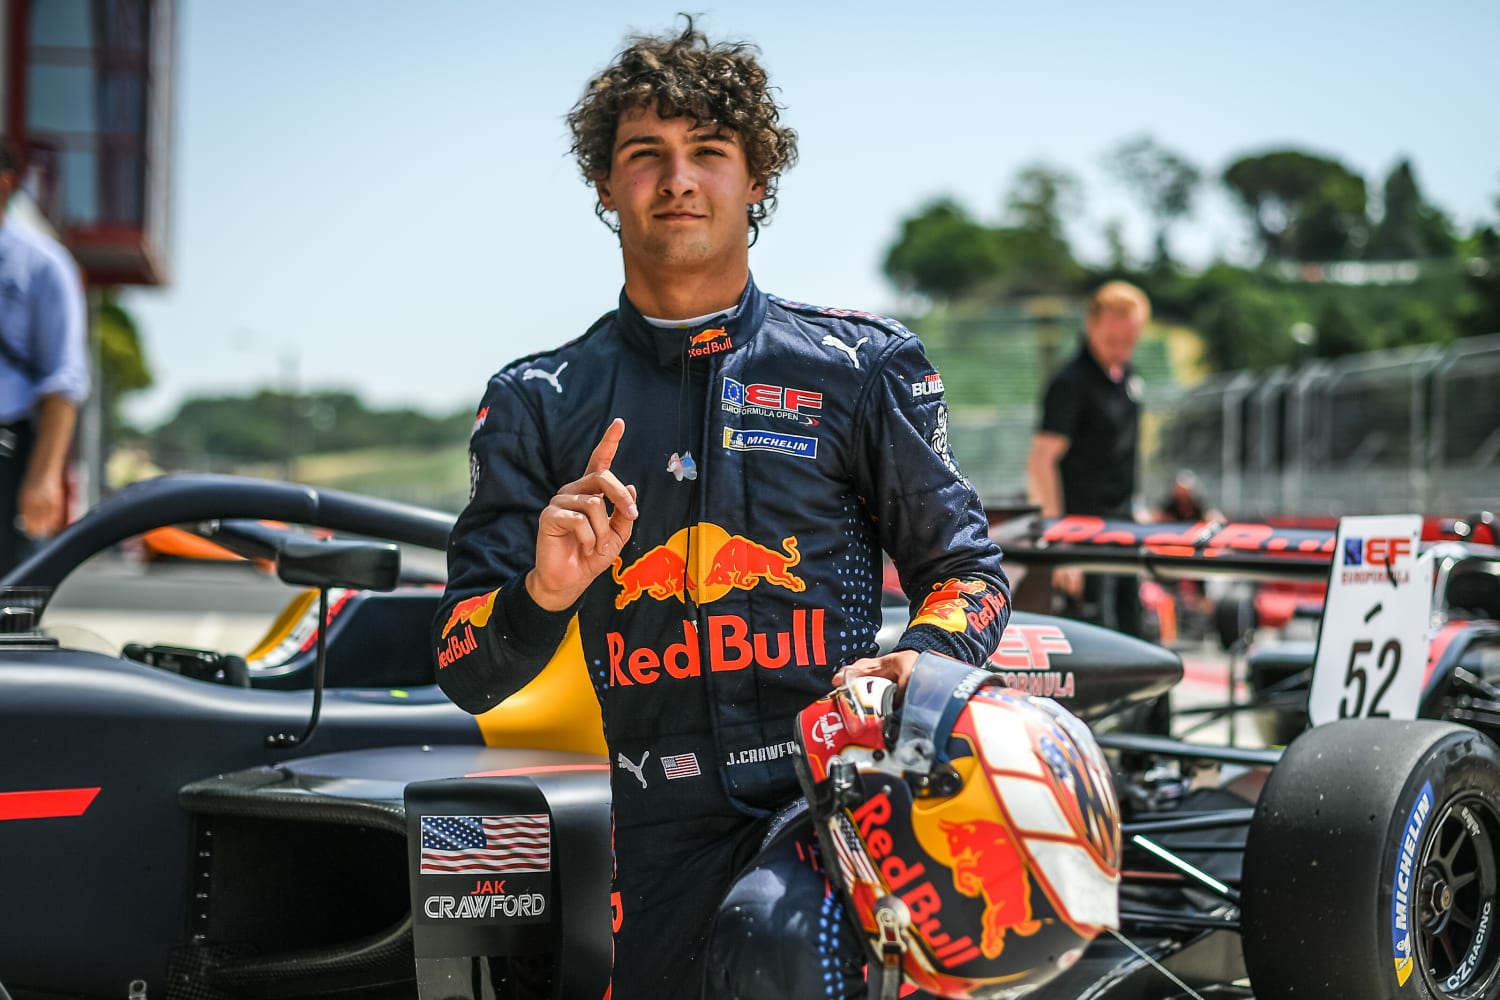 Jak Crawford: Motor Racing | Red Bull Athlete Profile